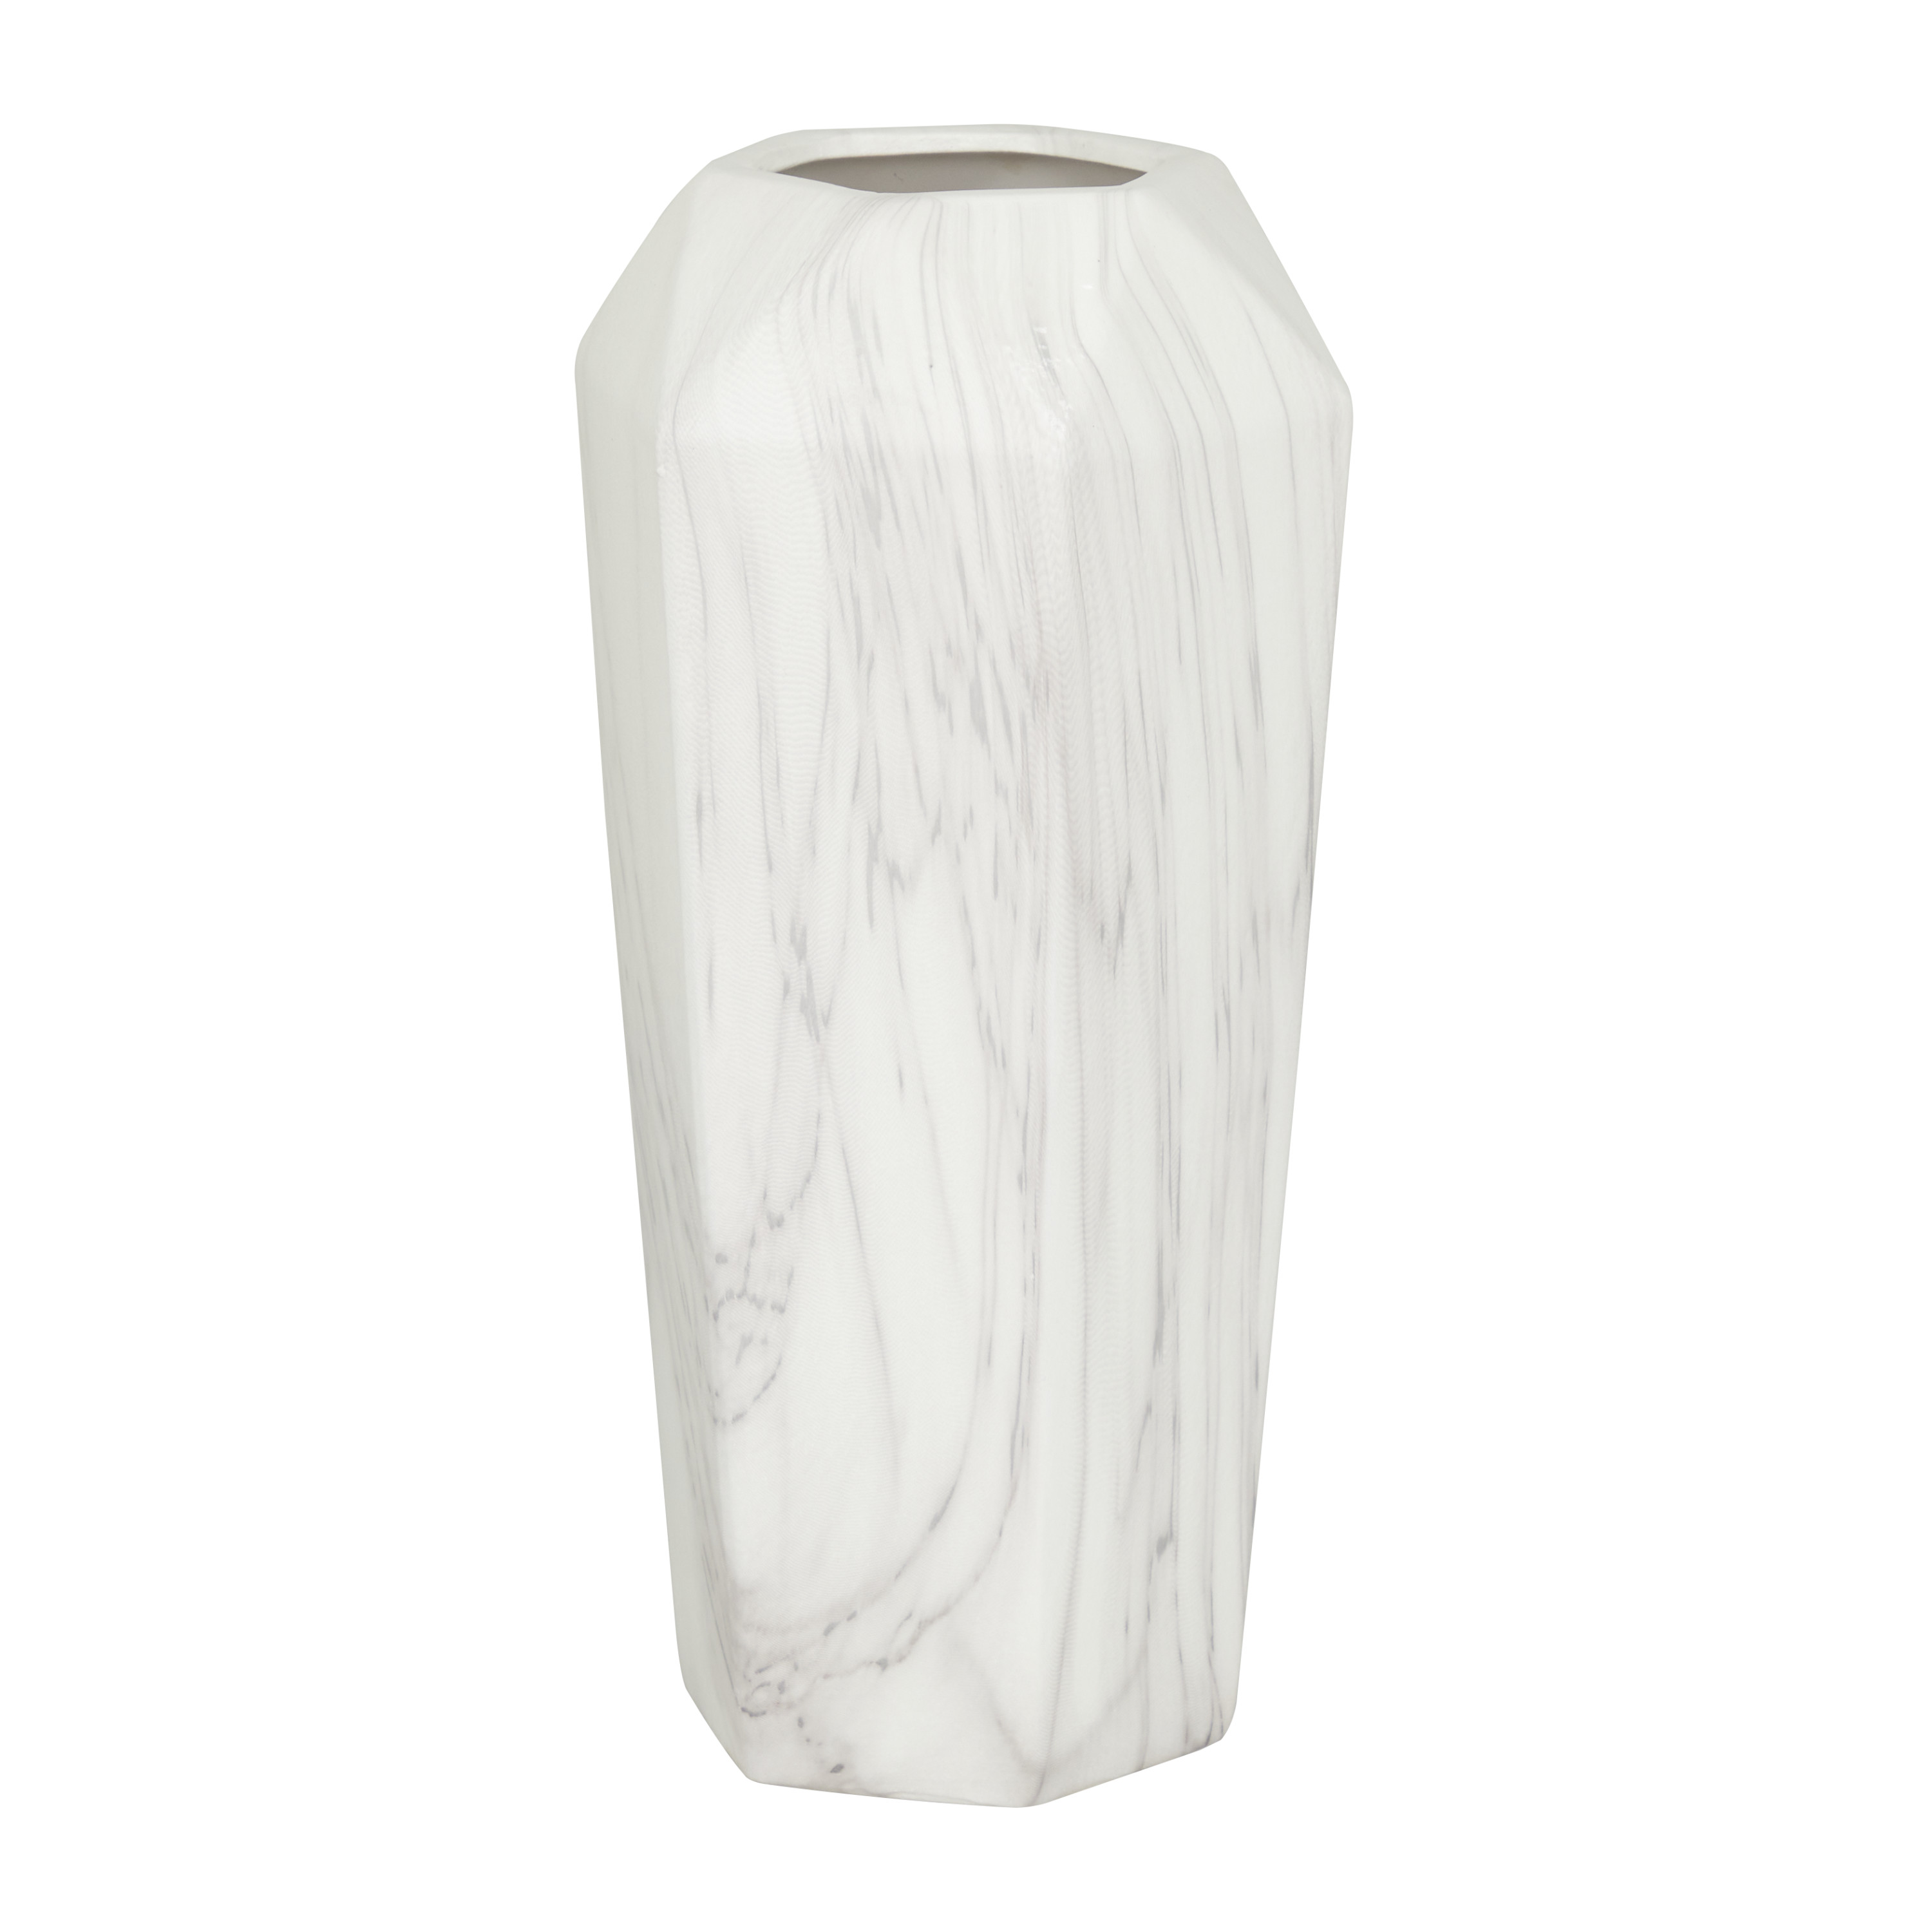 DecMode 14" Faux Marble White Ceramic Vase - image 1 of 9